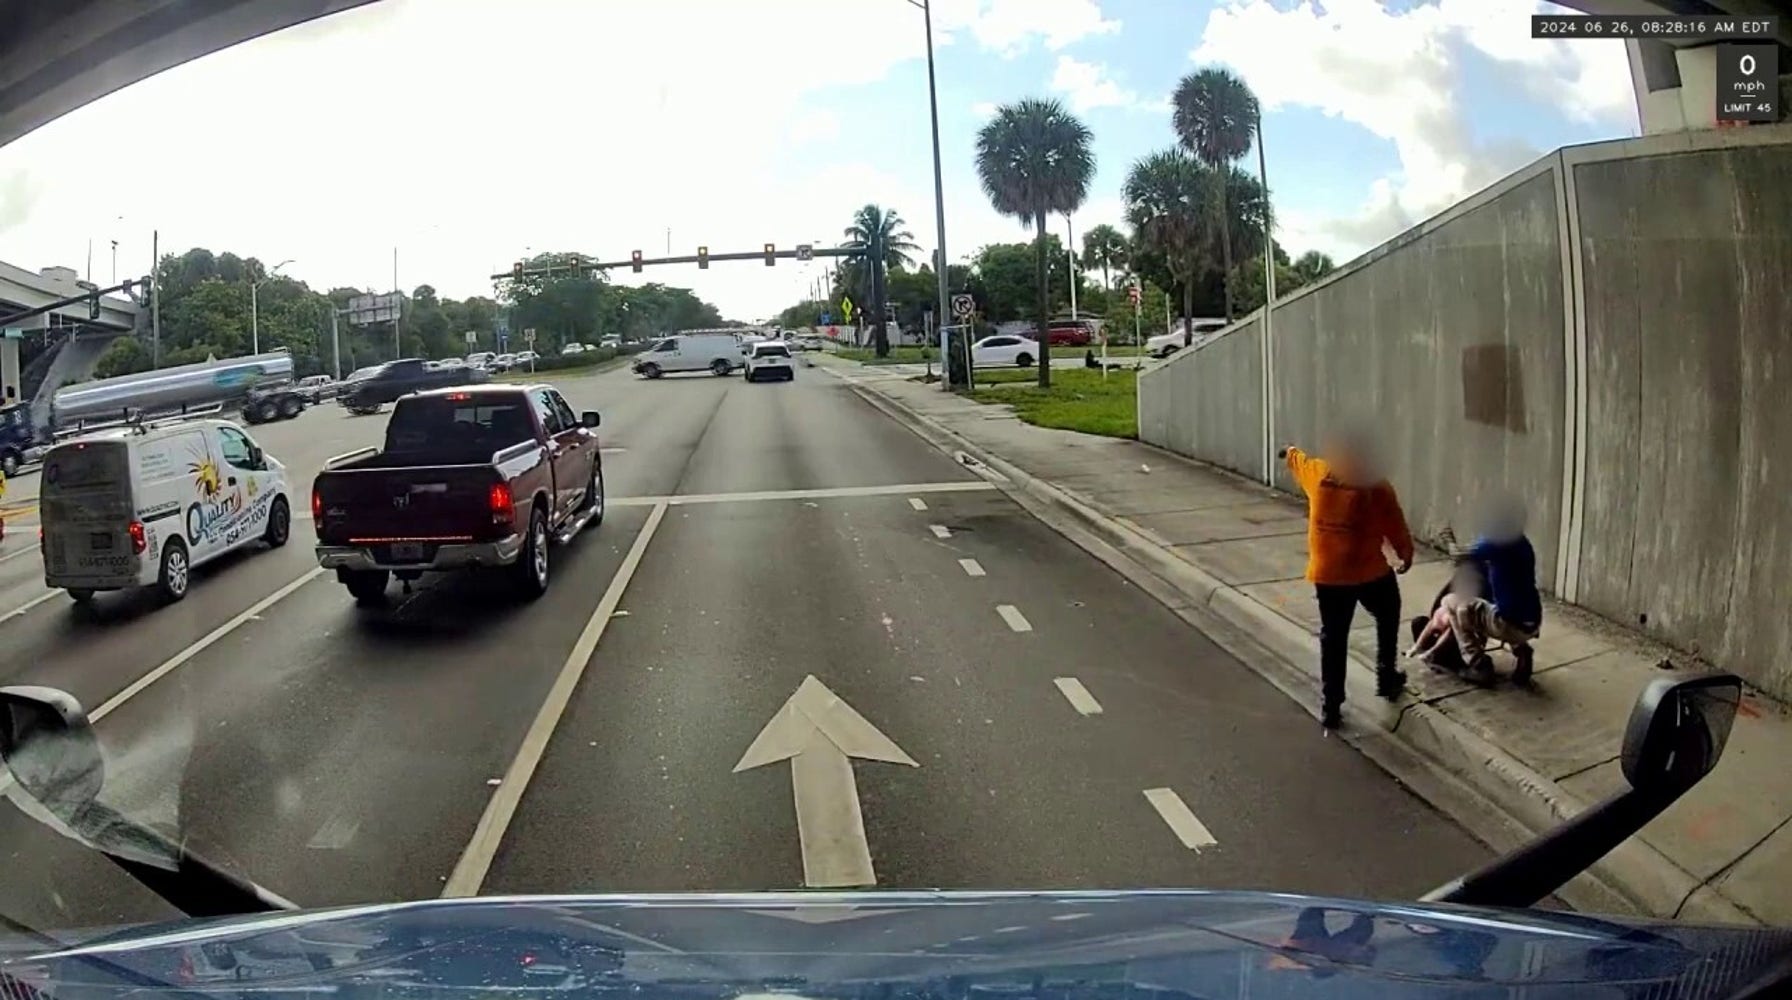 Florida Man Steals Car with Child Inside, Abandons Her on Roadside